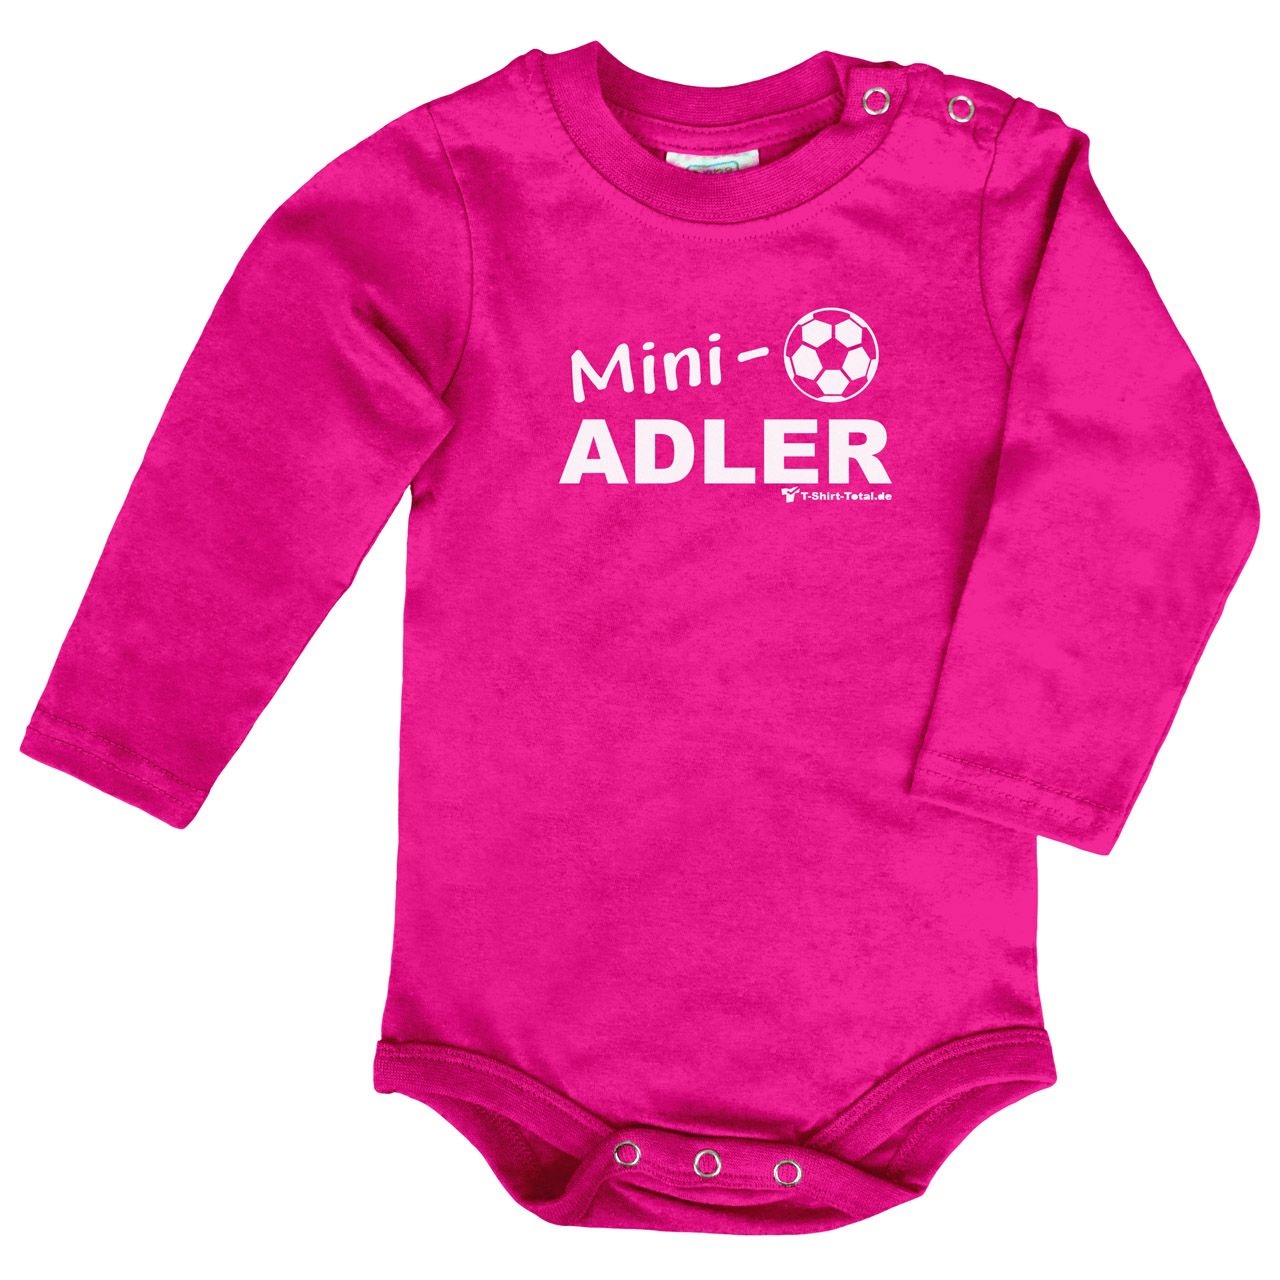 Mini Adler Baby Body Kurzarm pink 56 / 62